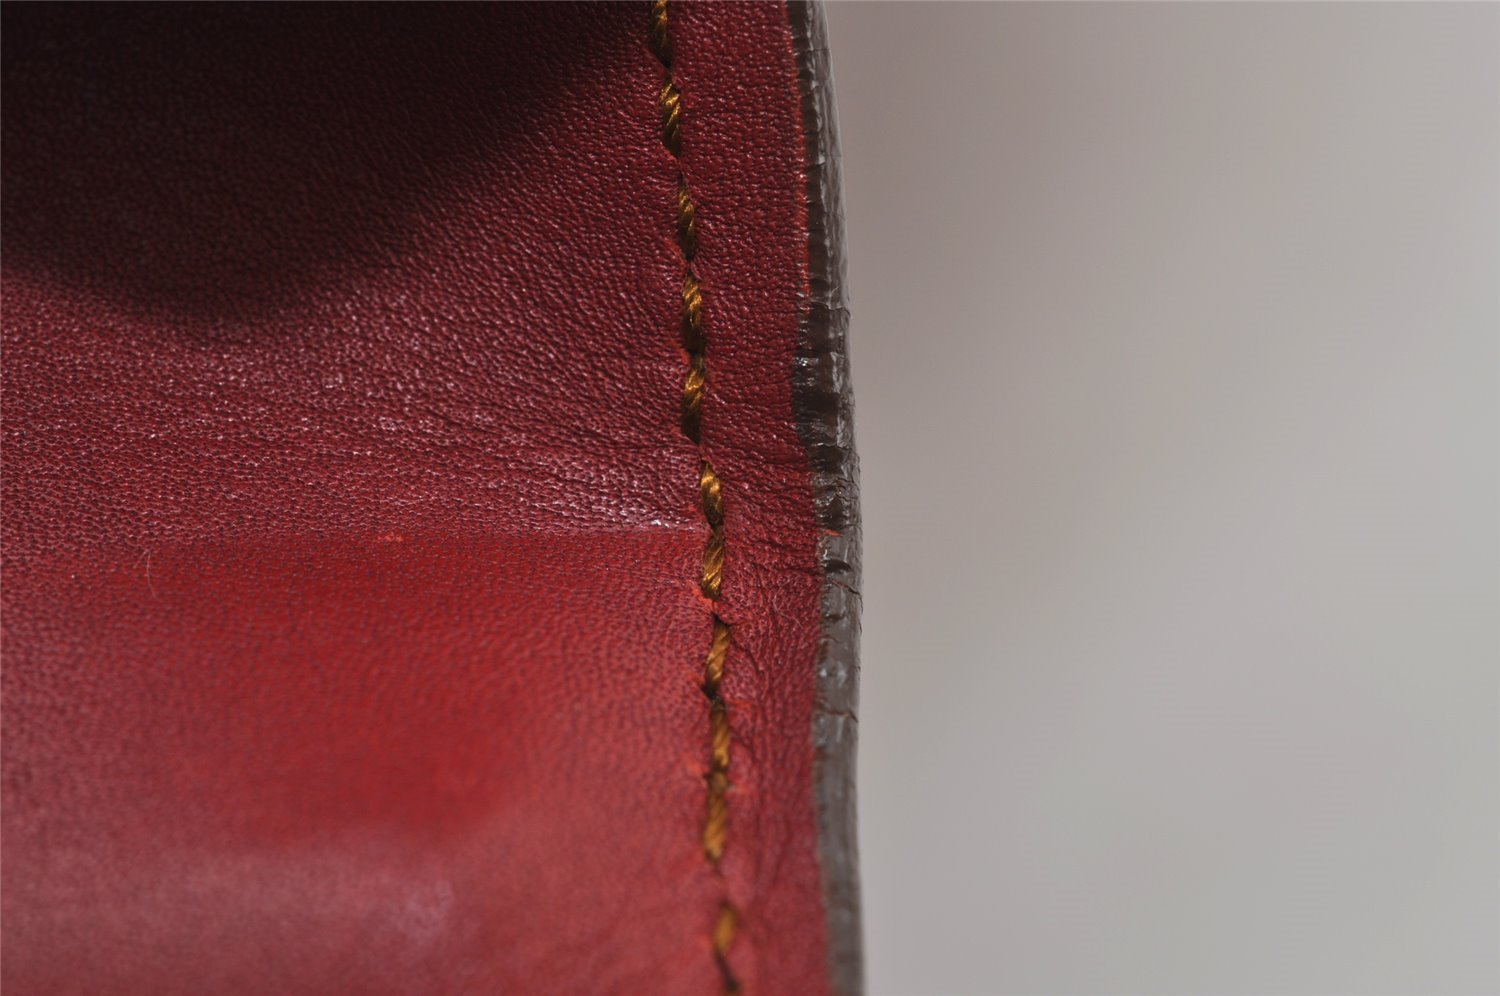 Authentic MIU MIU Vintage Leather Shoulder Hand Bag Red 8673I